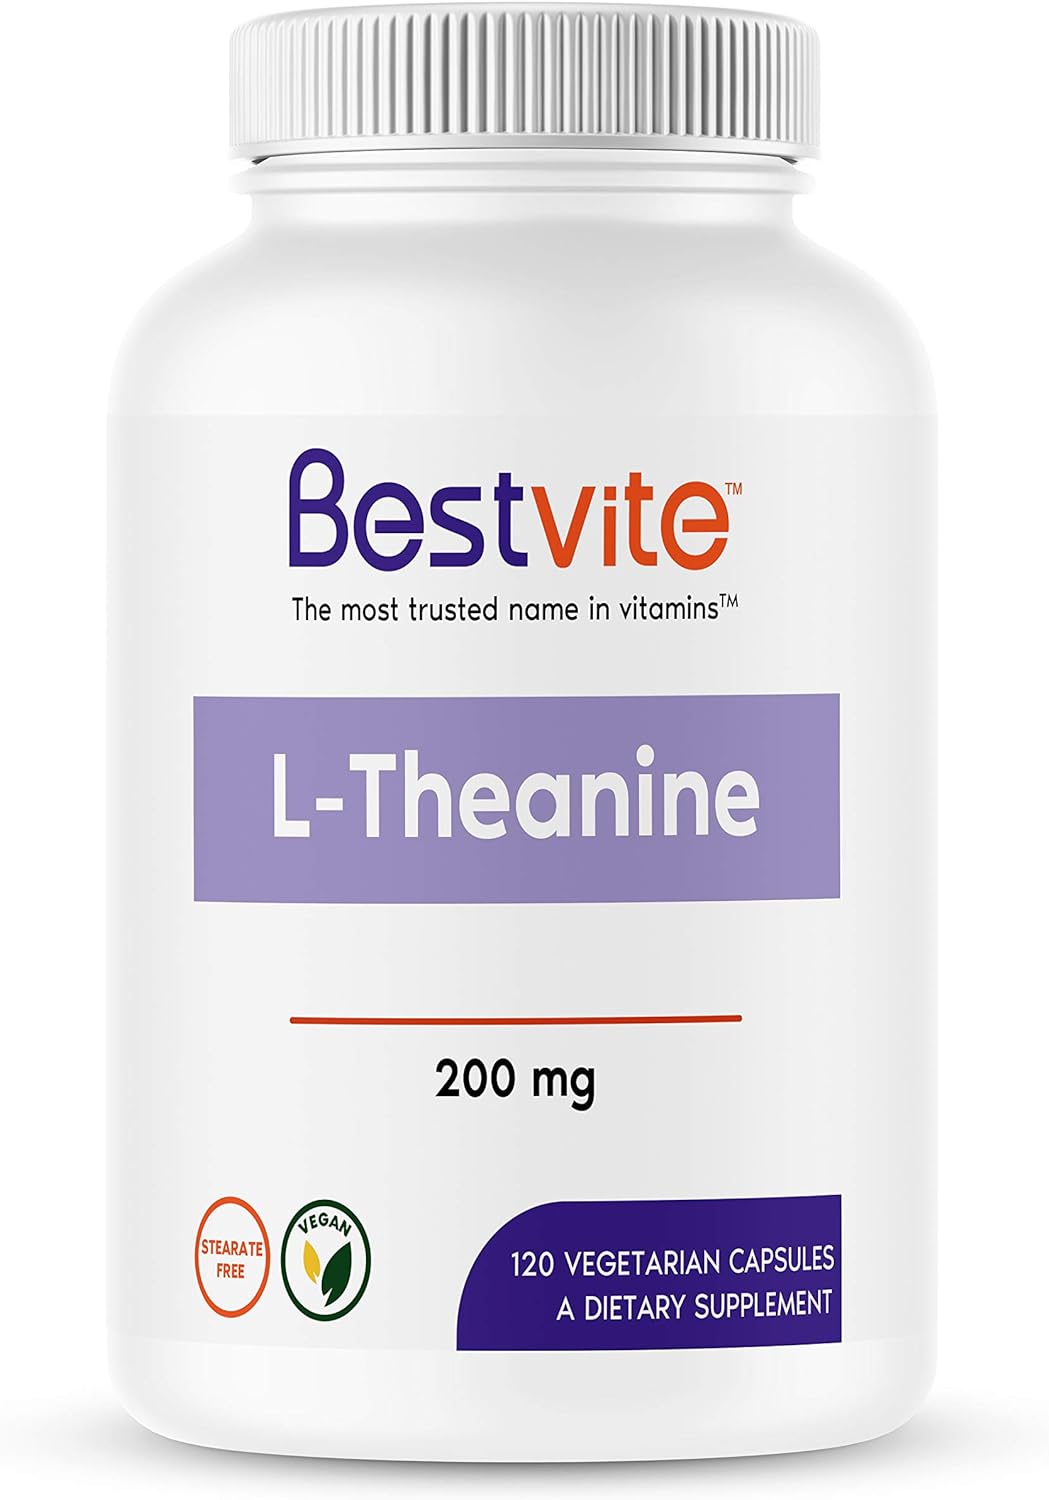 BESTVITE L-Theanine 200mg (120 Vegetarian Capsules) - No Stearates - V